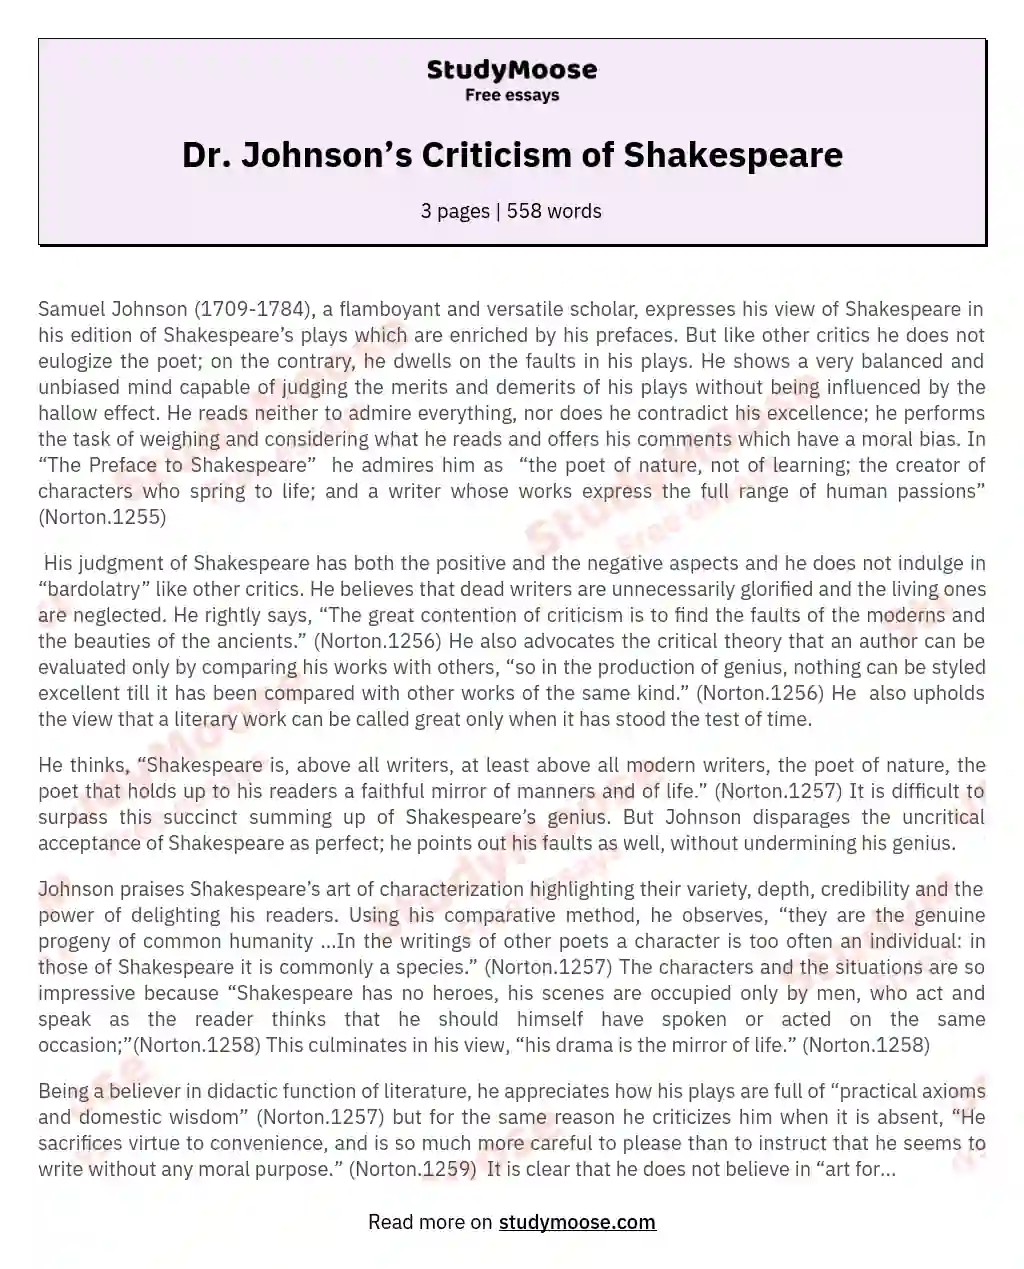 Dr. Johnson’s Criticism of Shakespeare essay